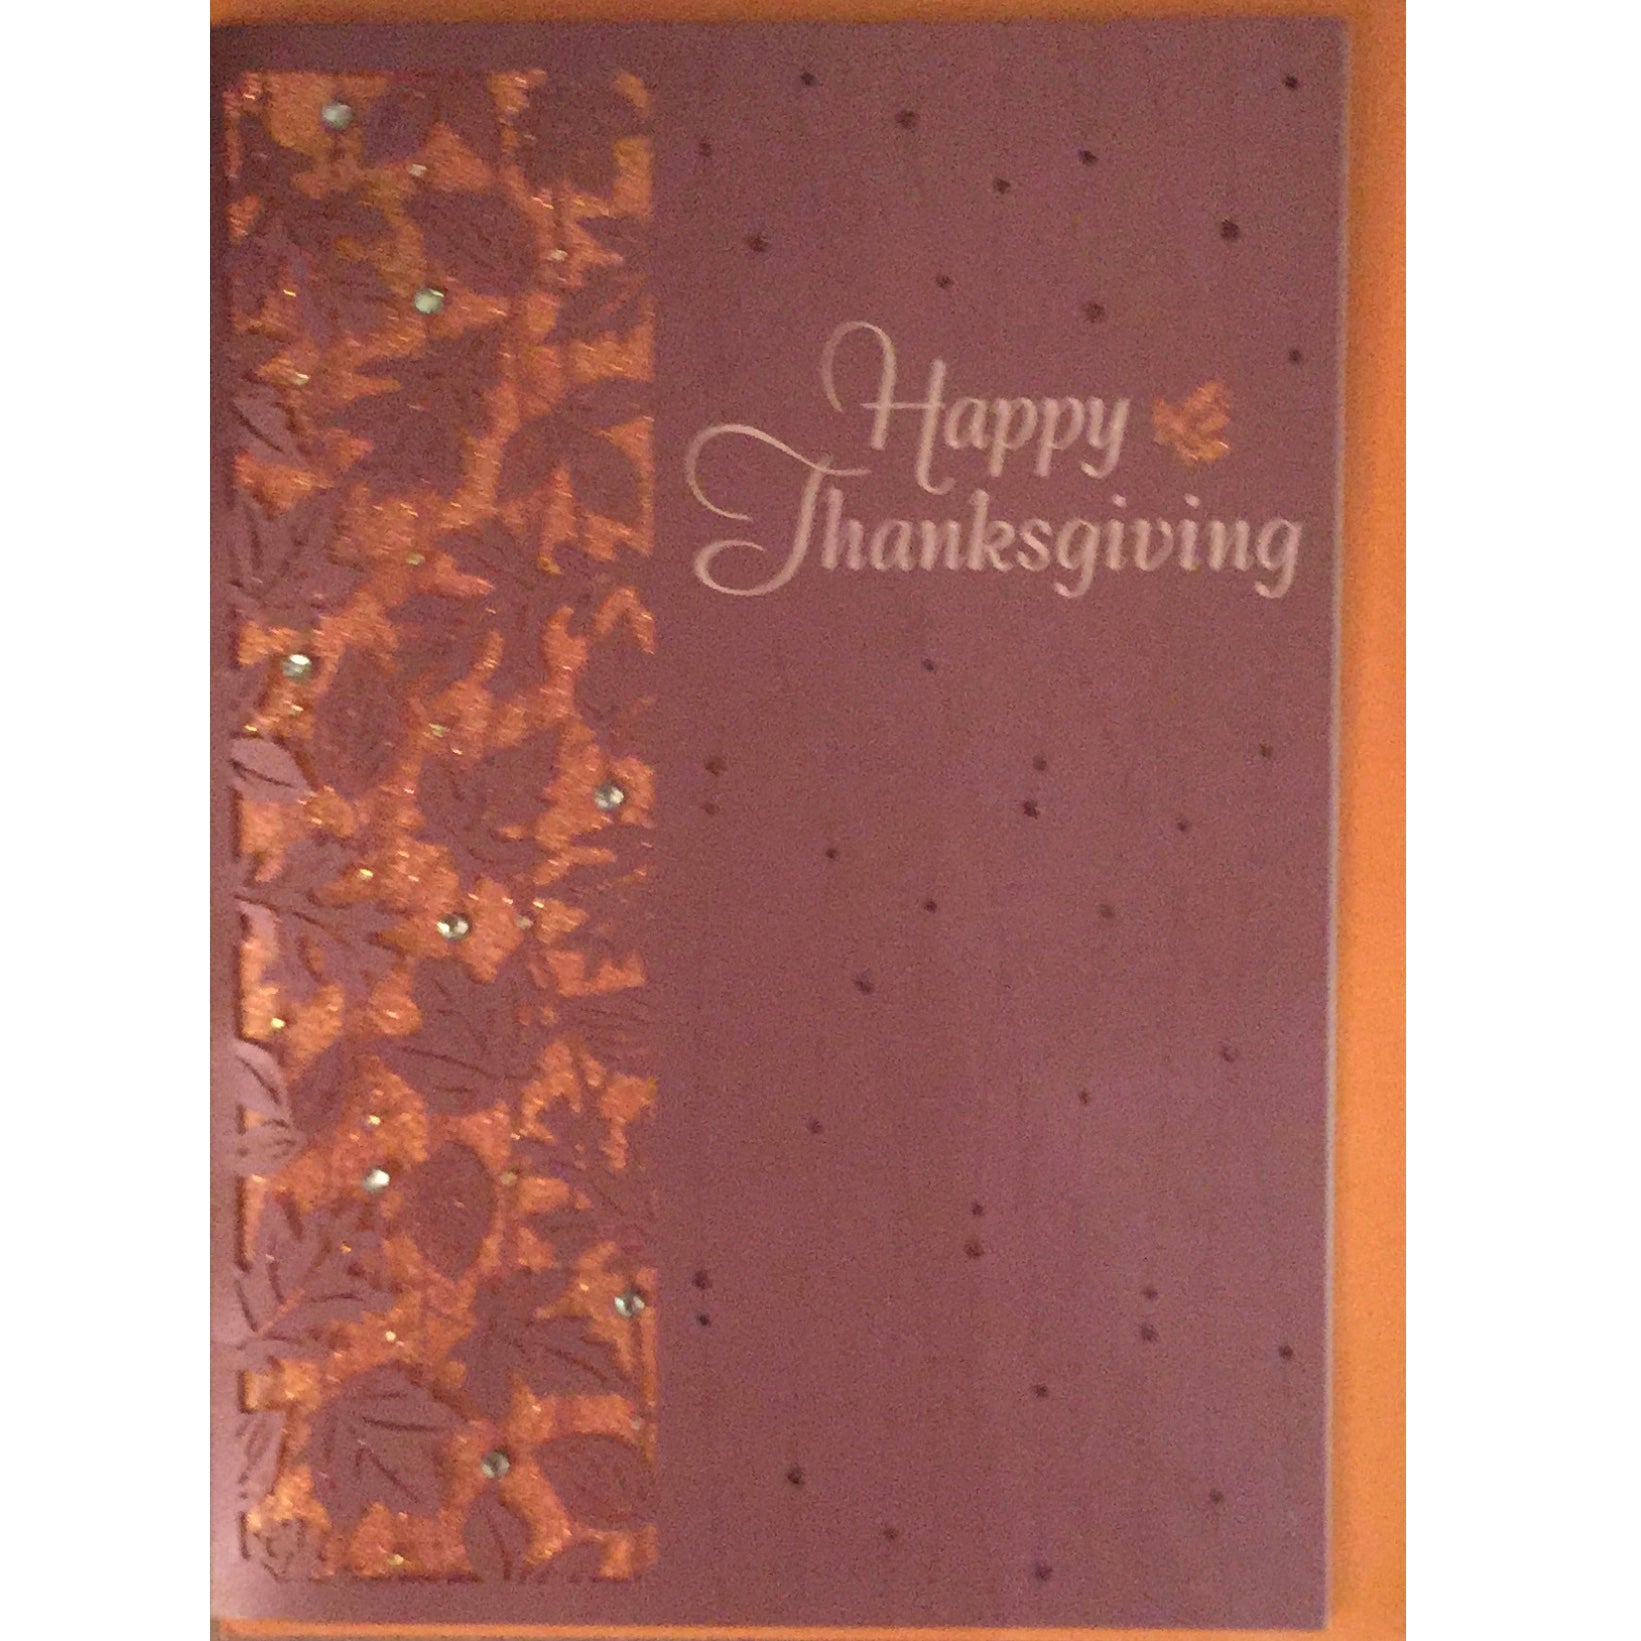 Design Design "Happy Thanksgiving" Greeting Card - Le Petite Putti 